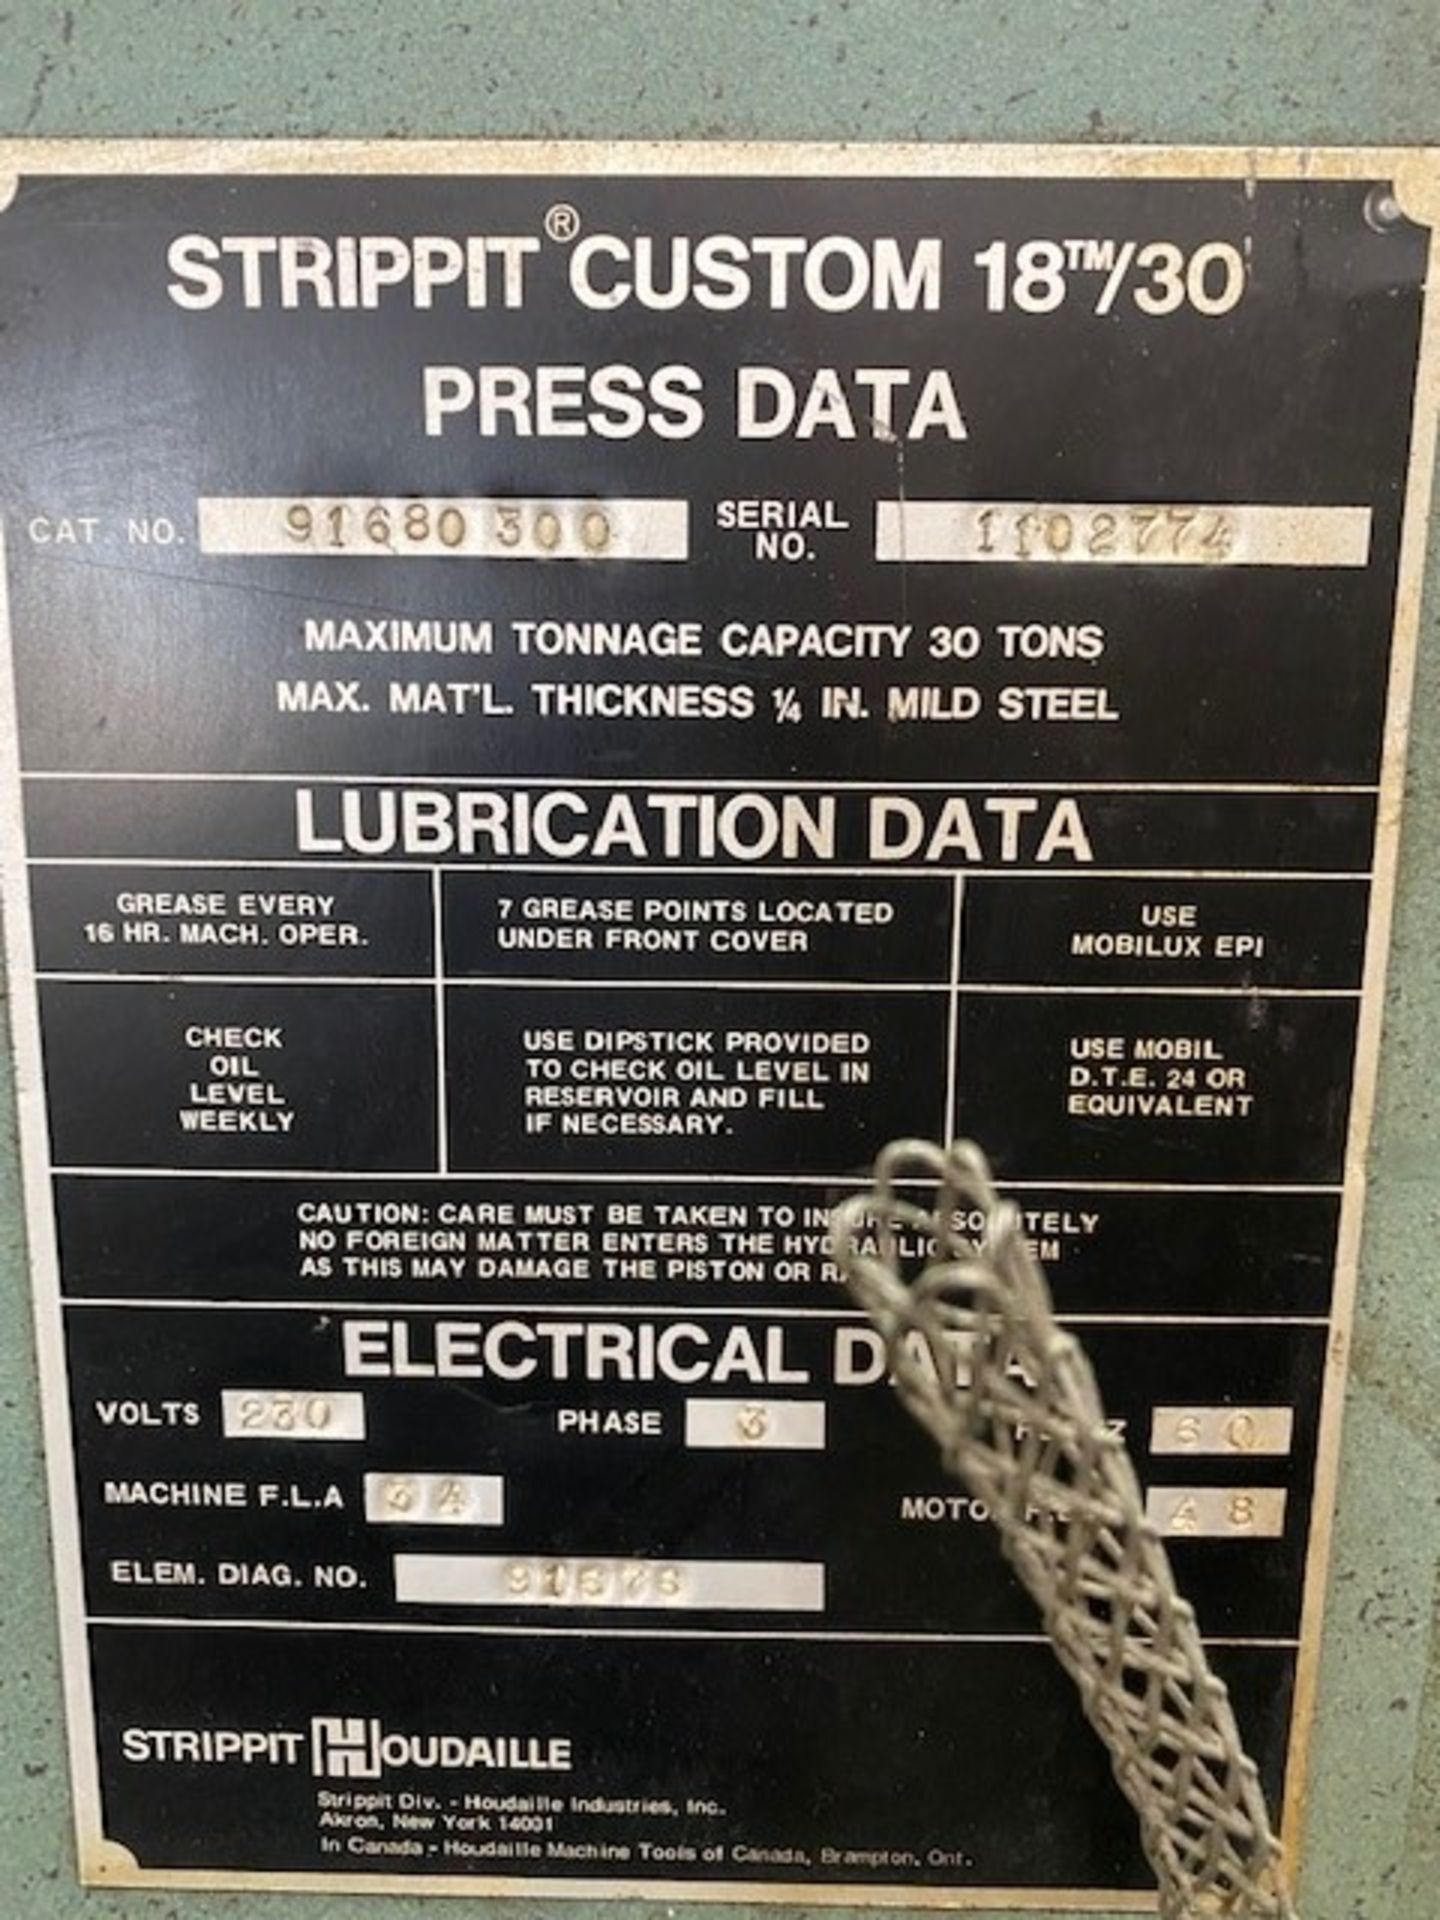 Strippit Custom 18/30 Model 91680 300, Punch Press Machine - Image 5 of 5